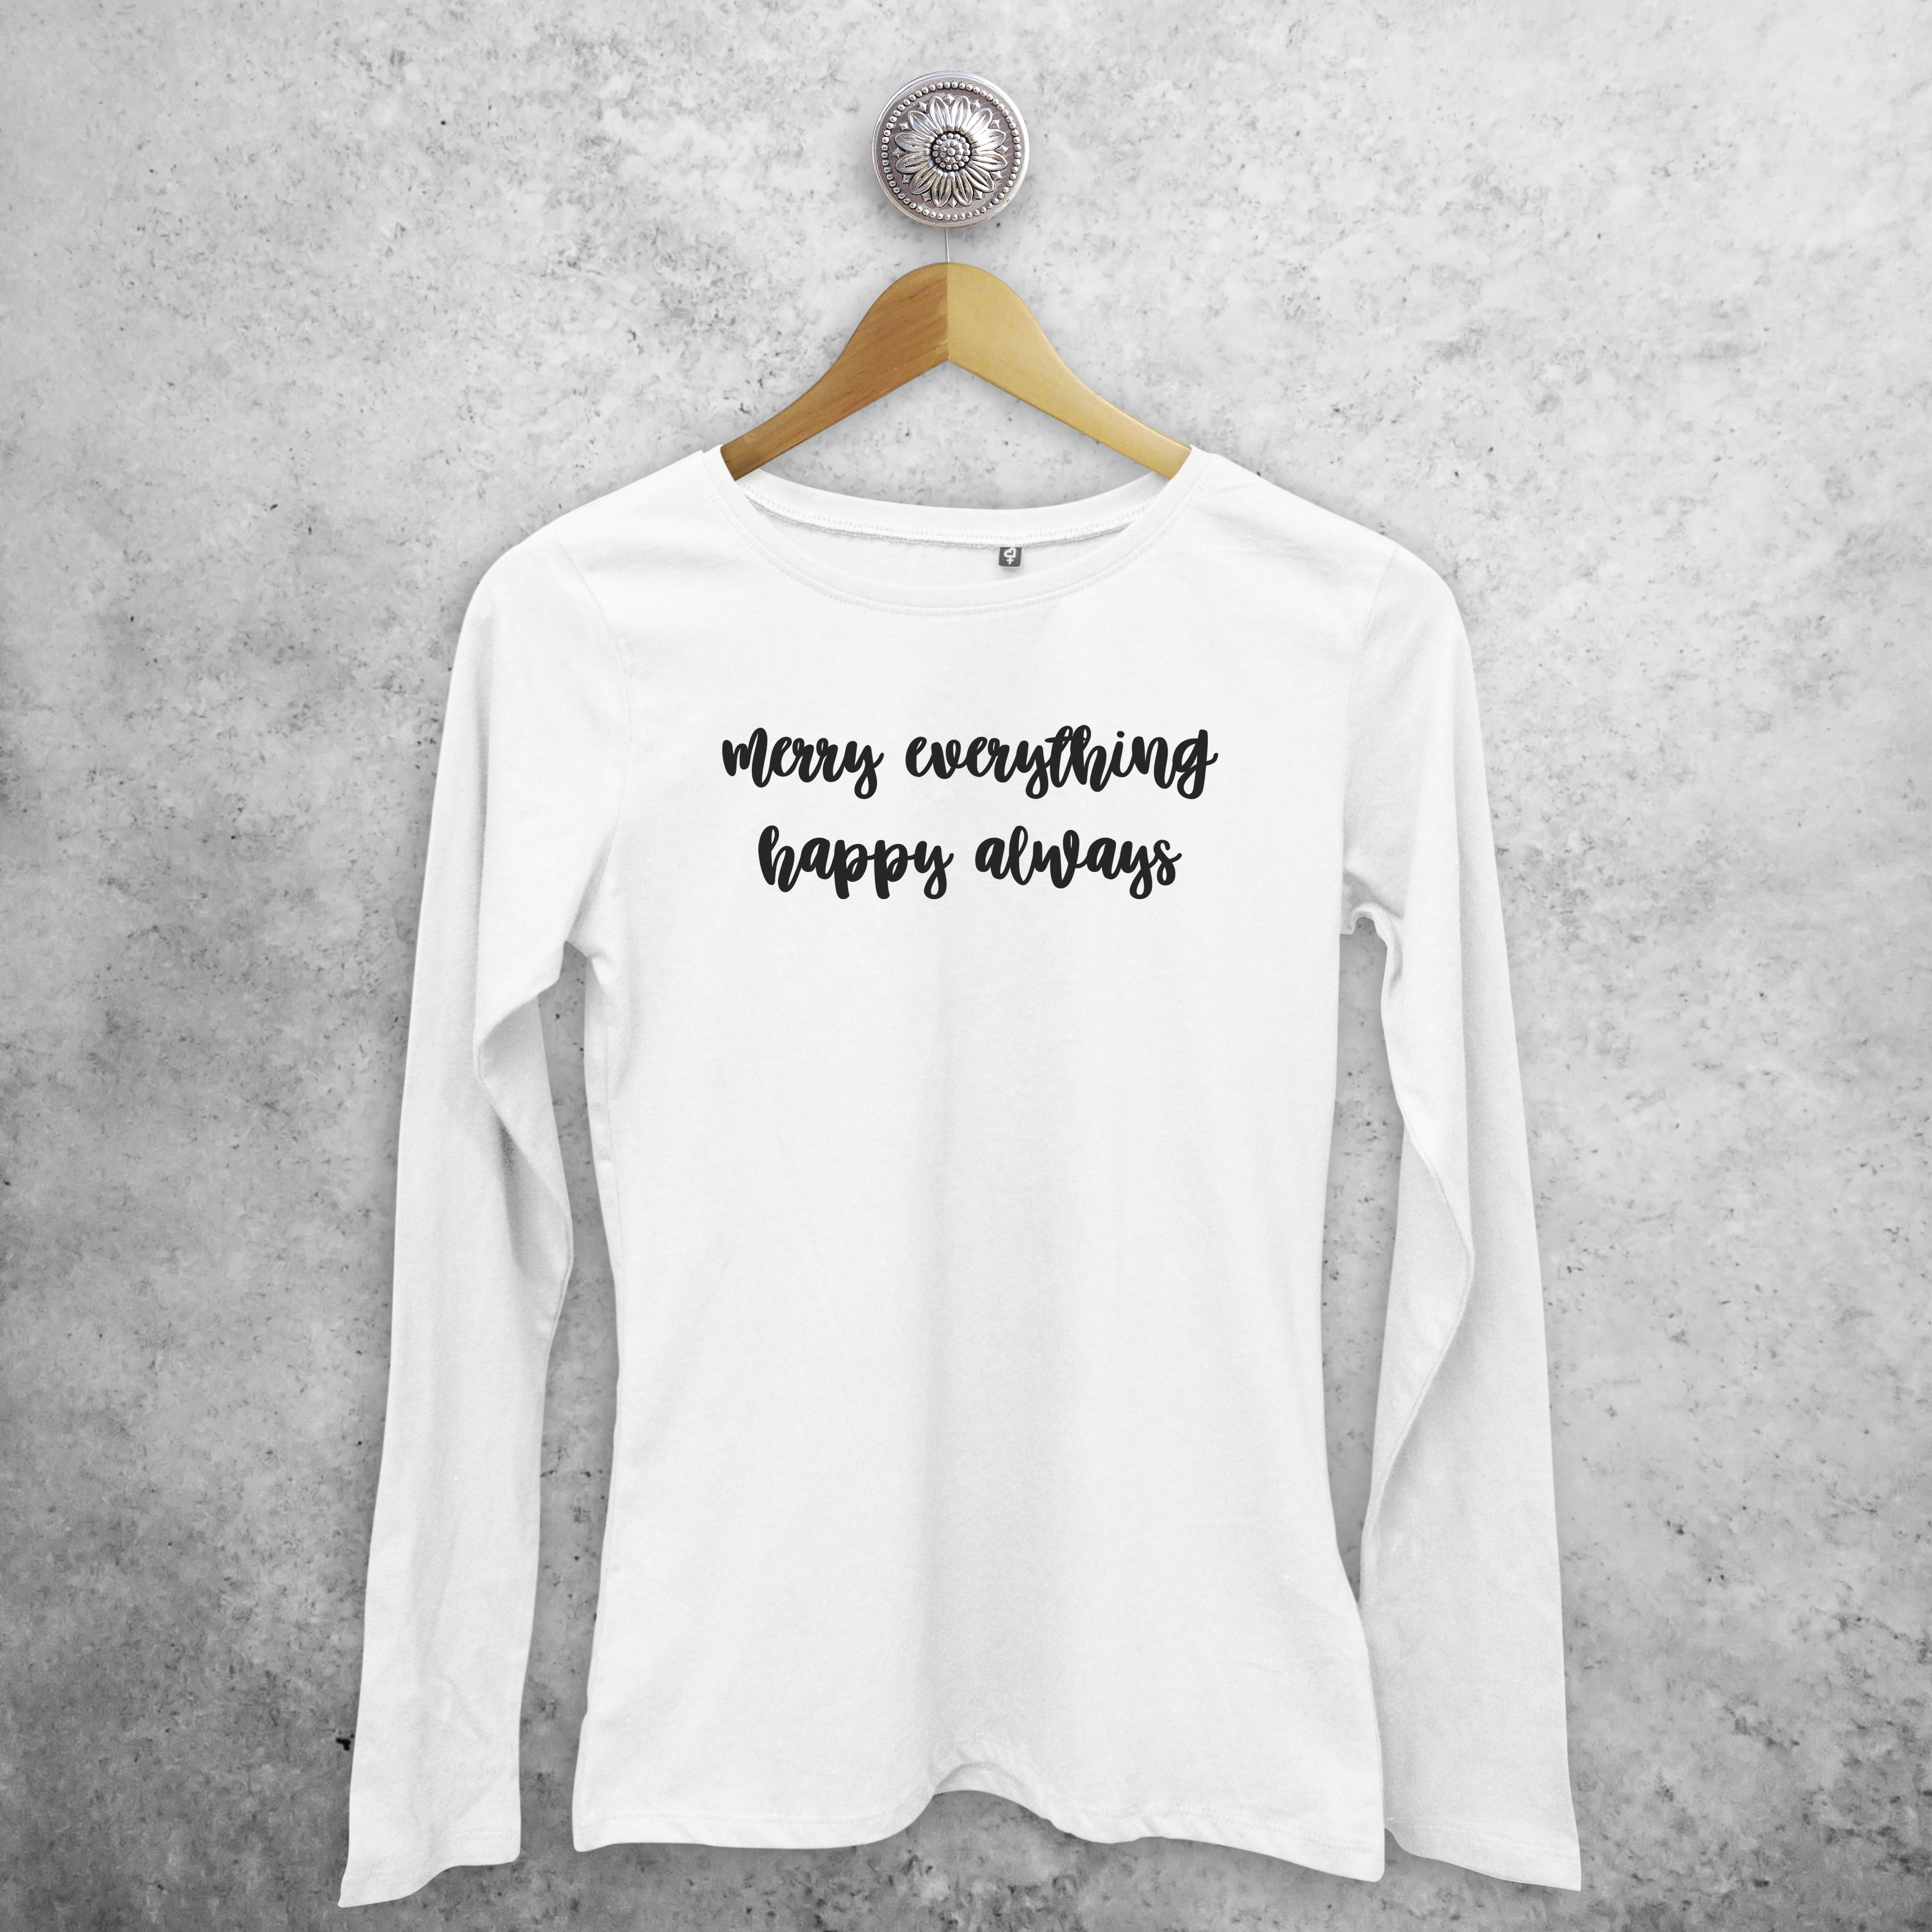 'Merry everything, Happy always' volwassene shirt met lange mouwen